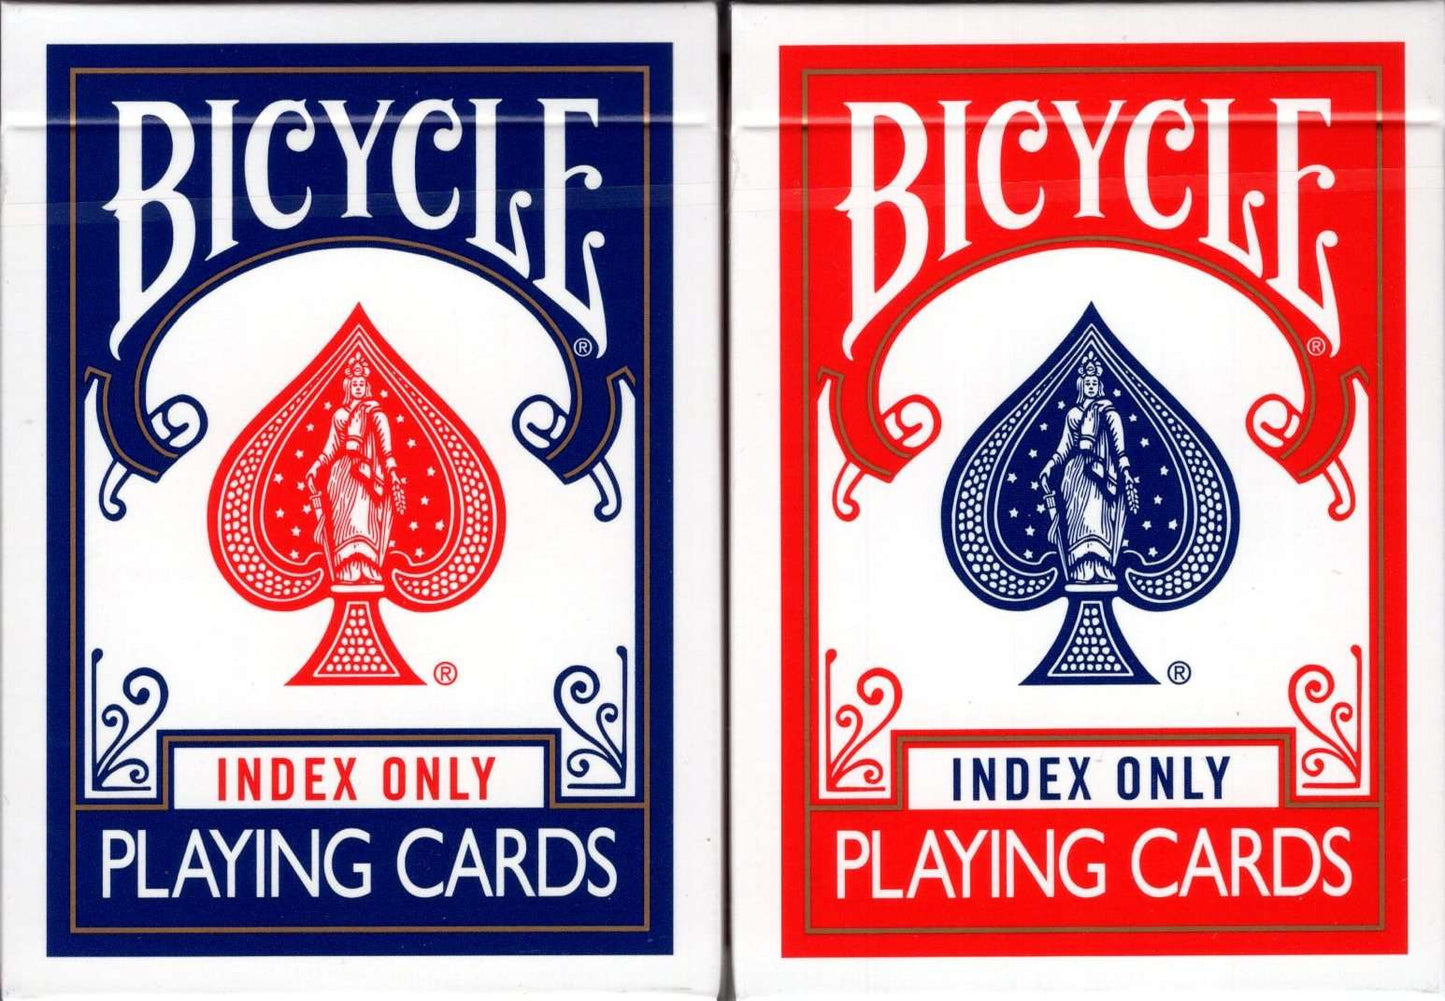 Single Blue Deck Standard Playing Cards (Wide Size, Regular Index)